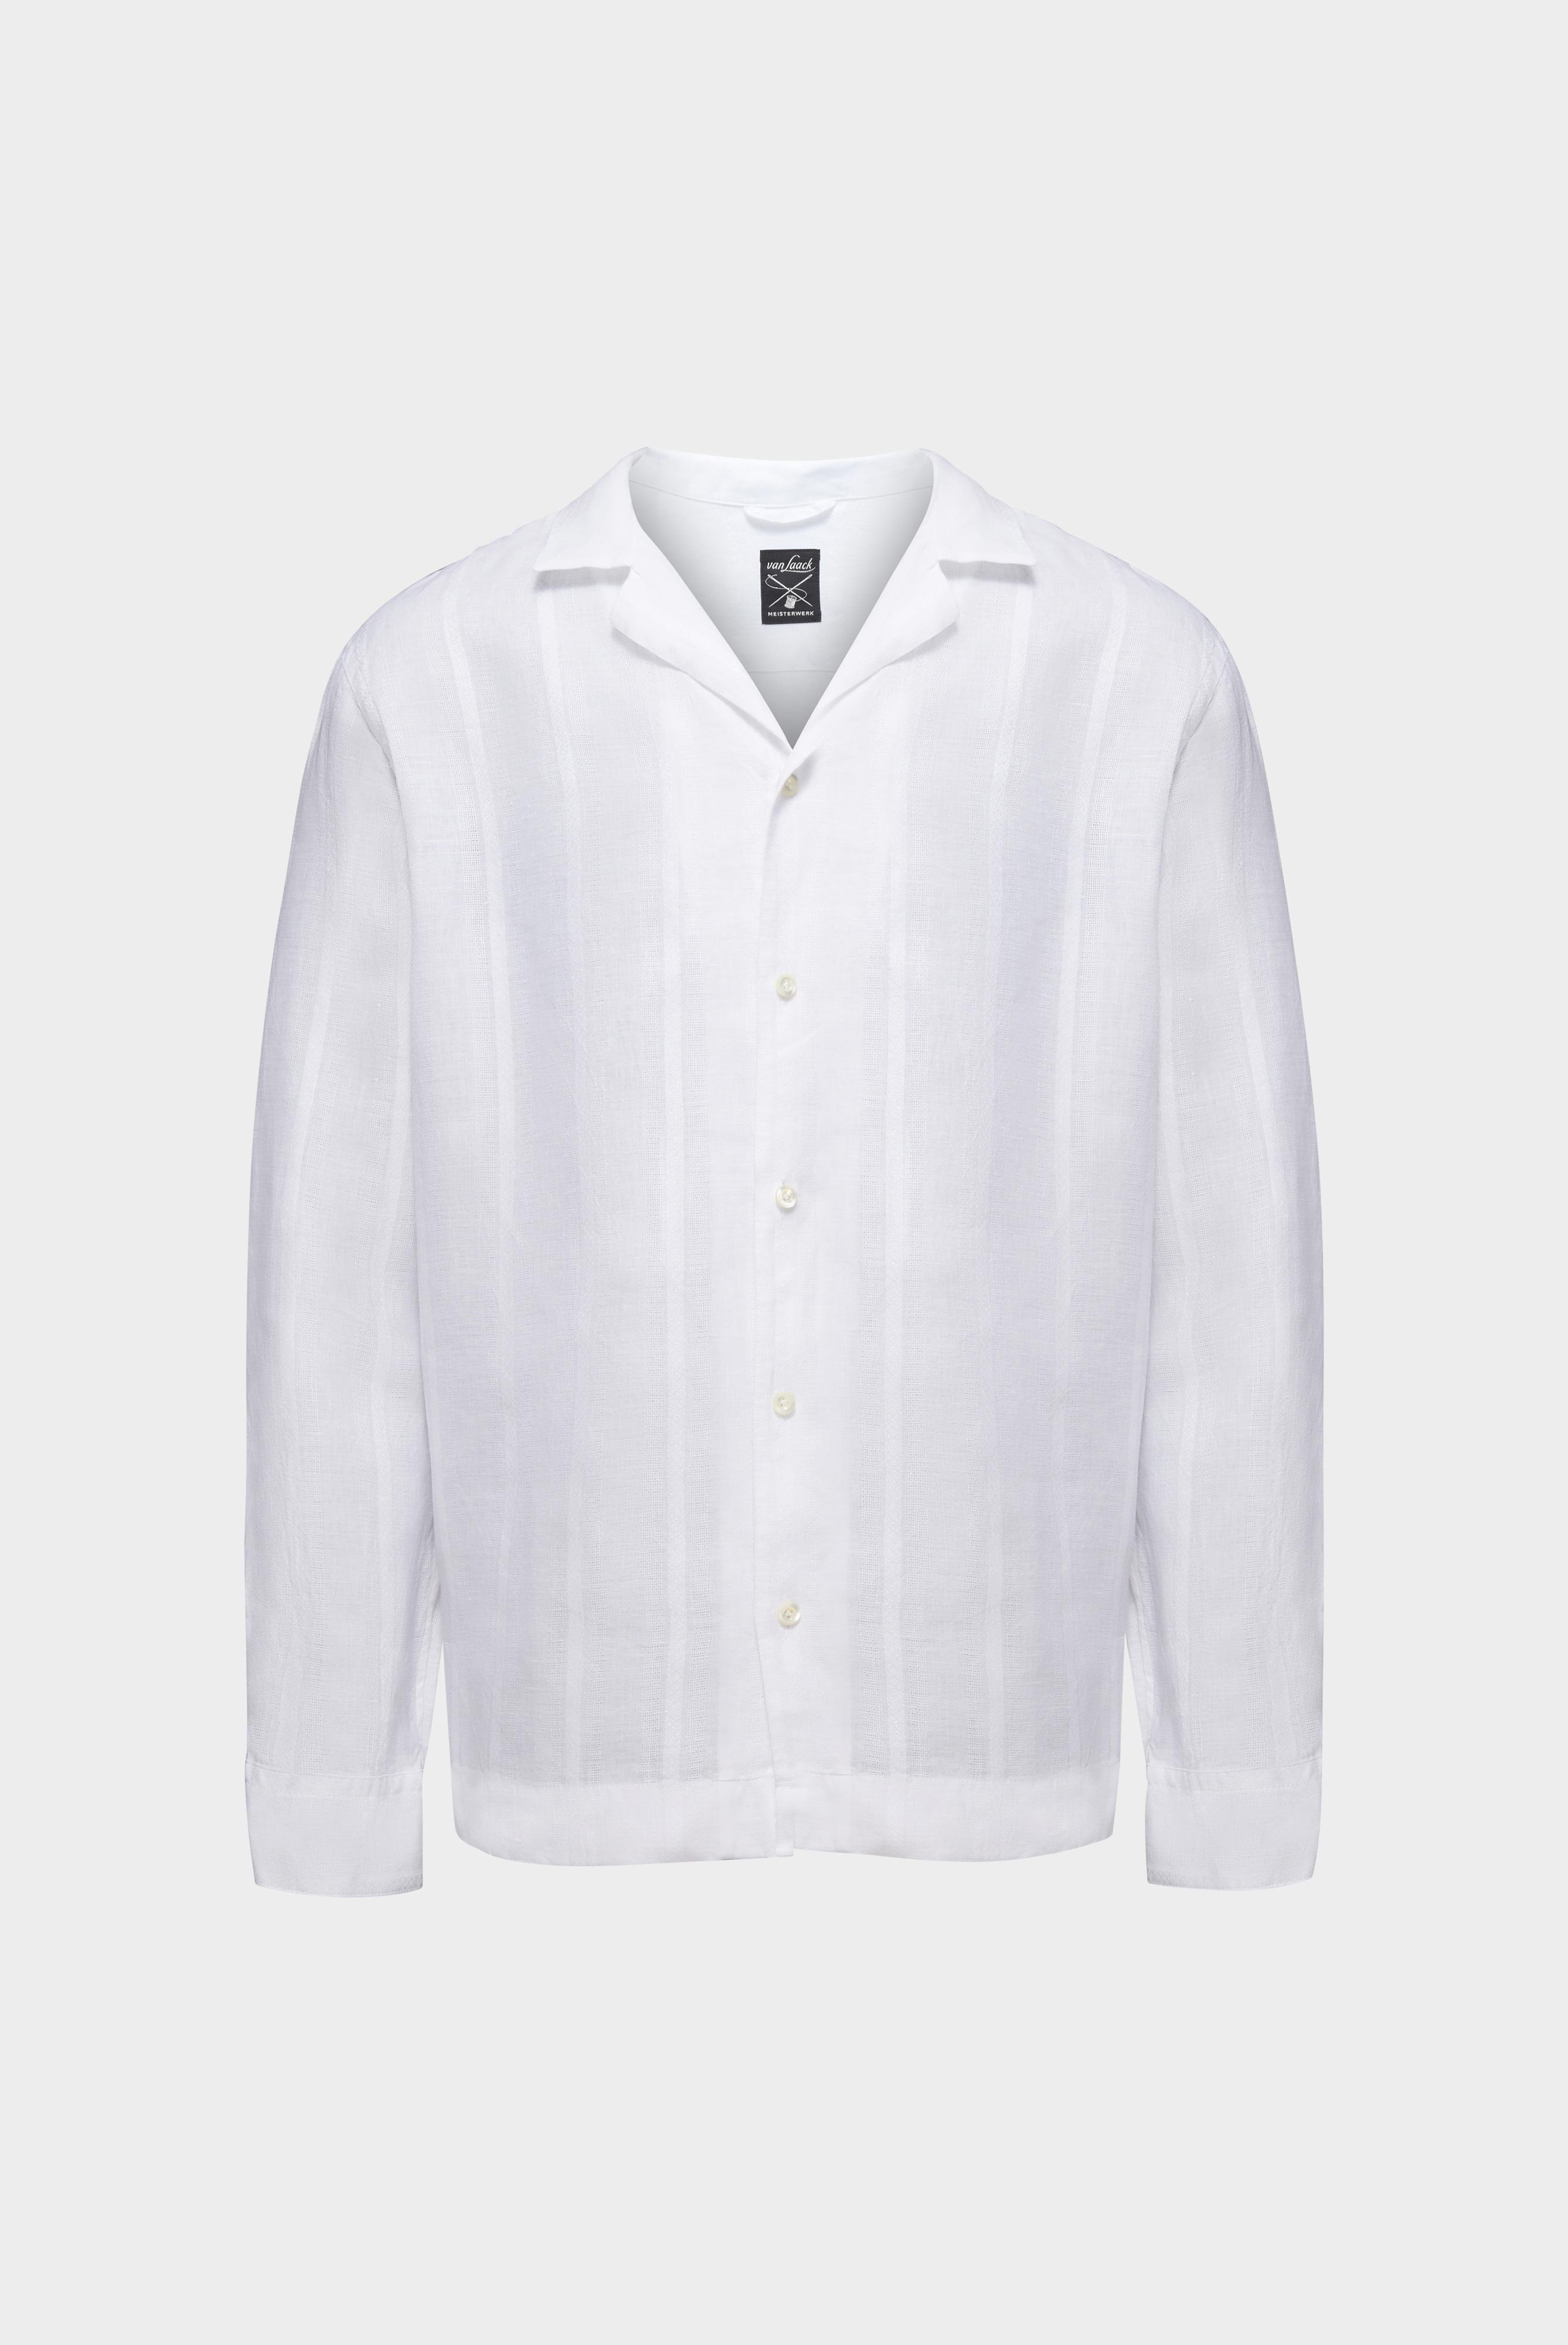 Casual Shirts+Long sleeve linen bowling shirt with jacquard stripes+20.2076.EB.155046.000.S